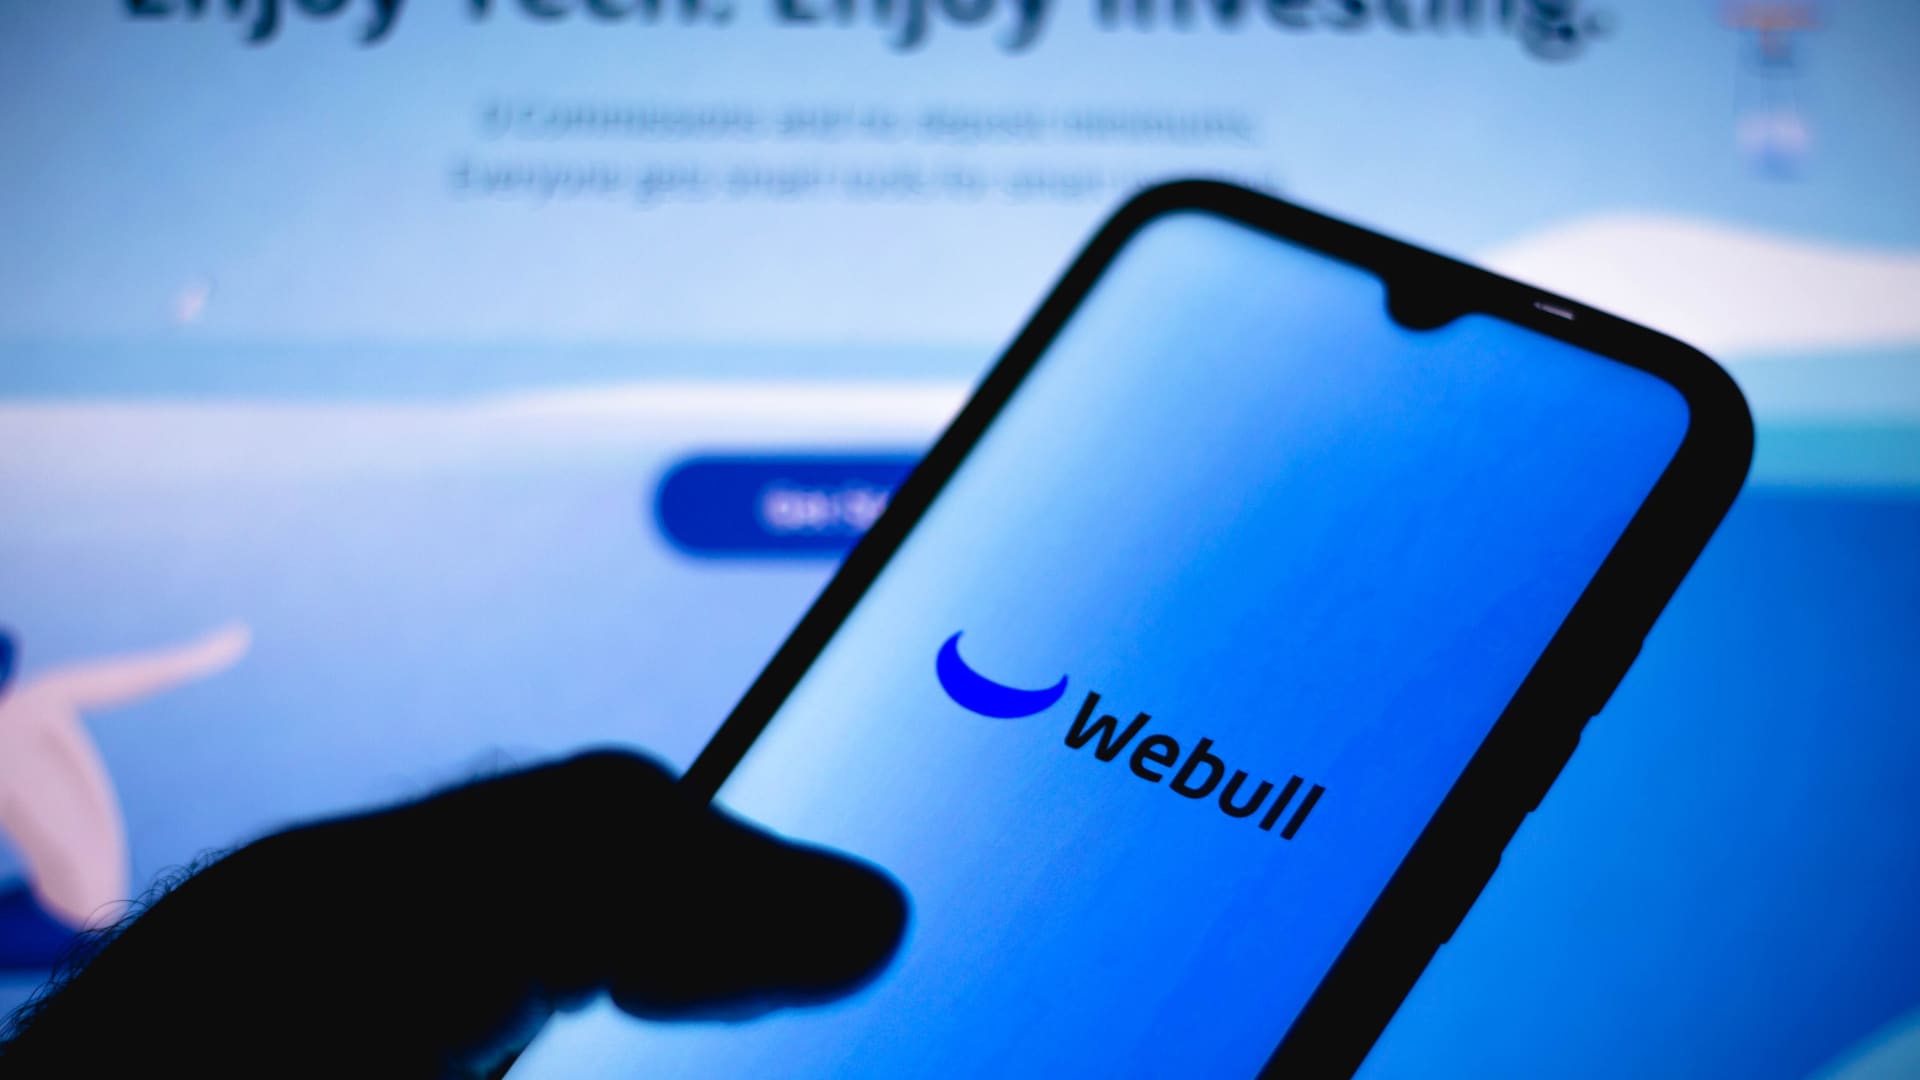 Online trading platform Webull set to go public via $7.3B SPAC deal